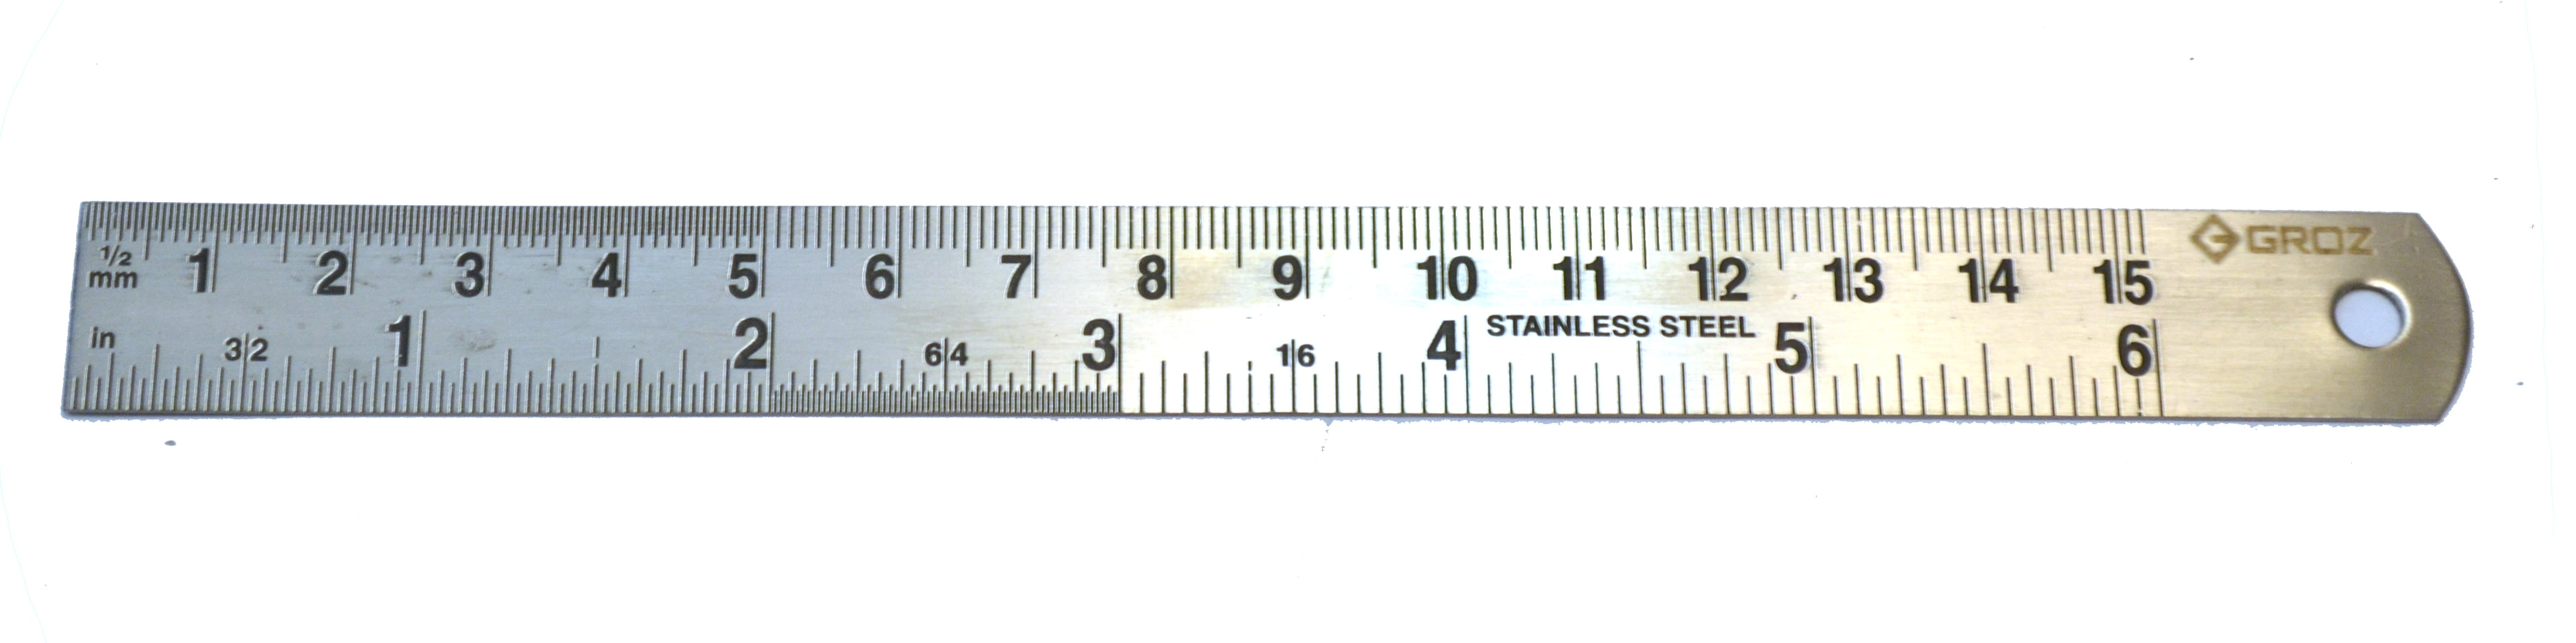 Groz 01330 6 English Metric Ruler Stainless Steel Ruler Walmart Walmart